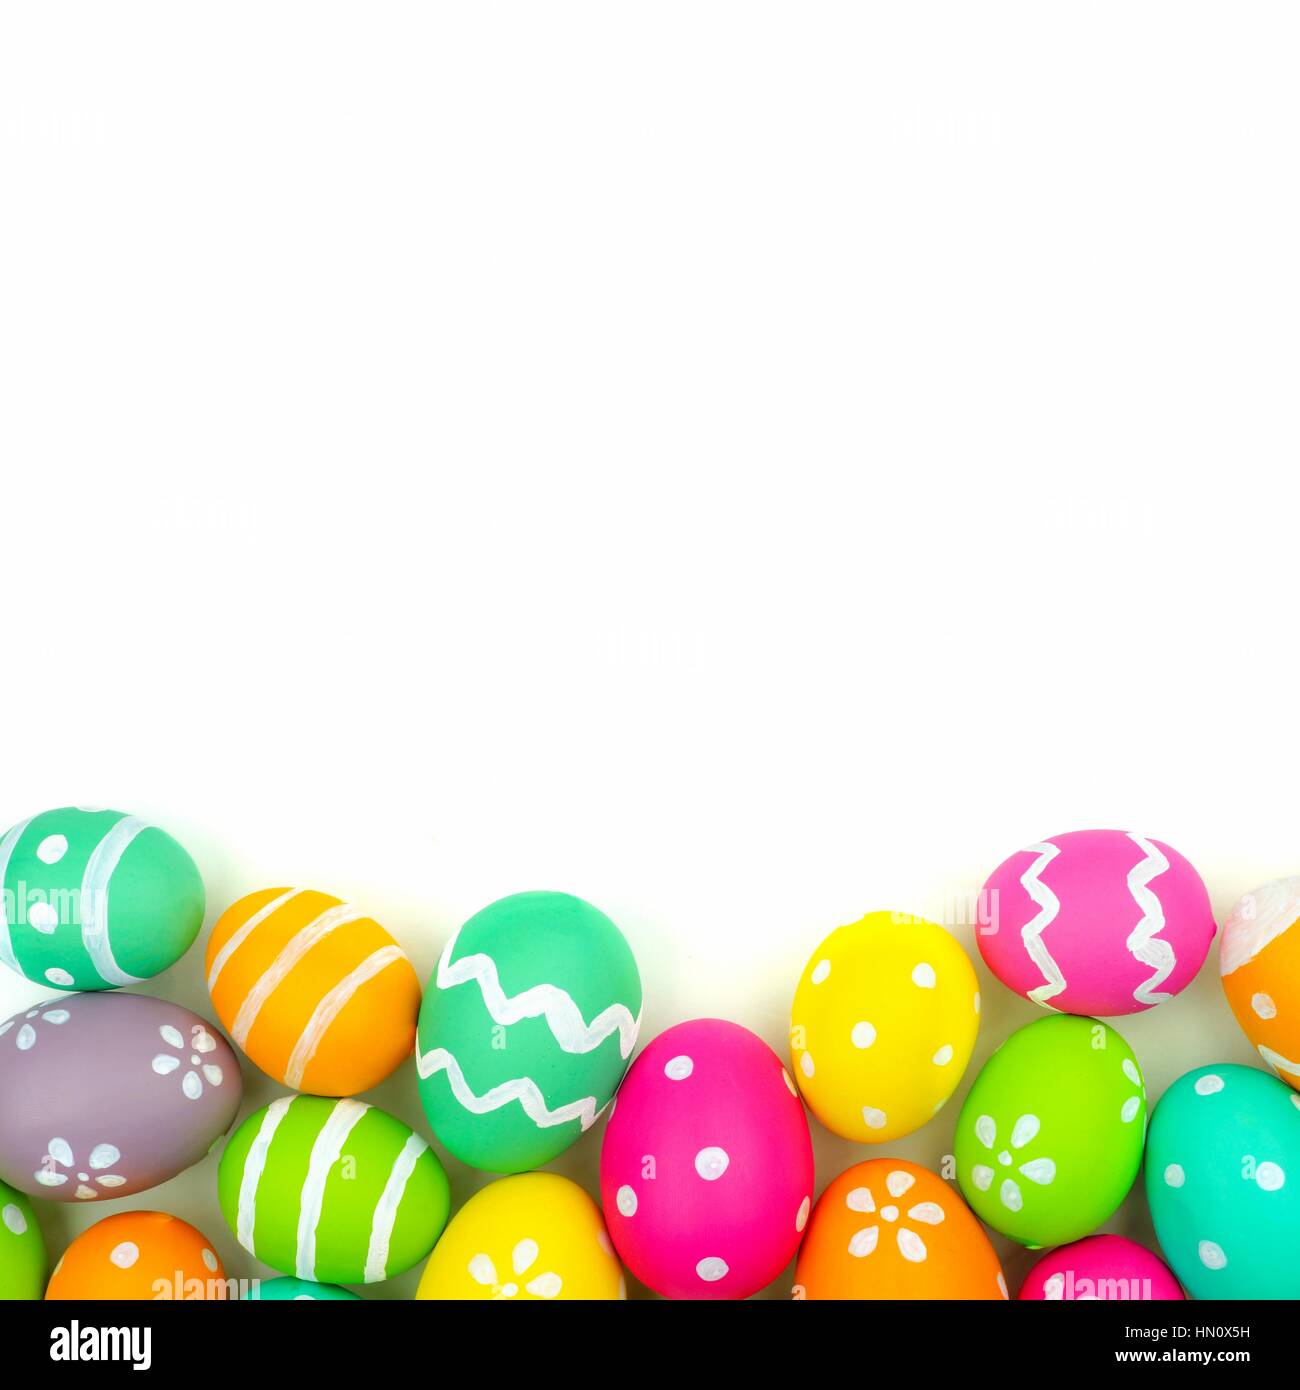 Colorful Easter egg bottom border against a white background Stock Photo